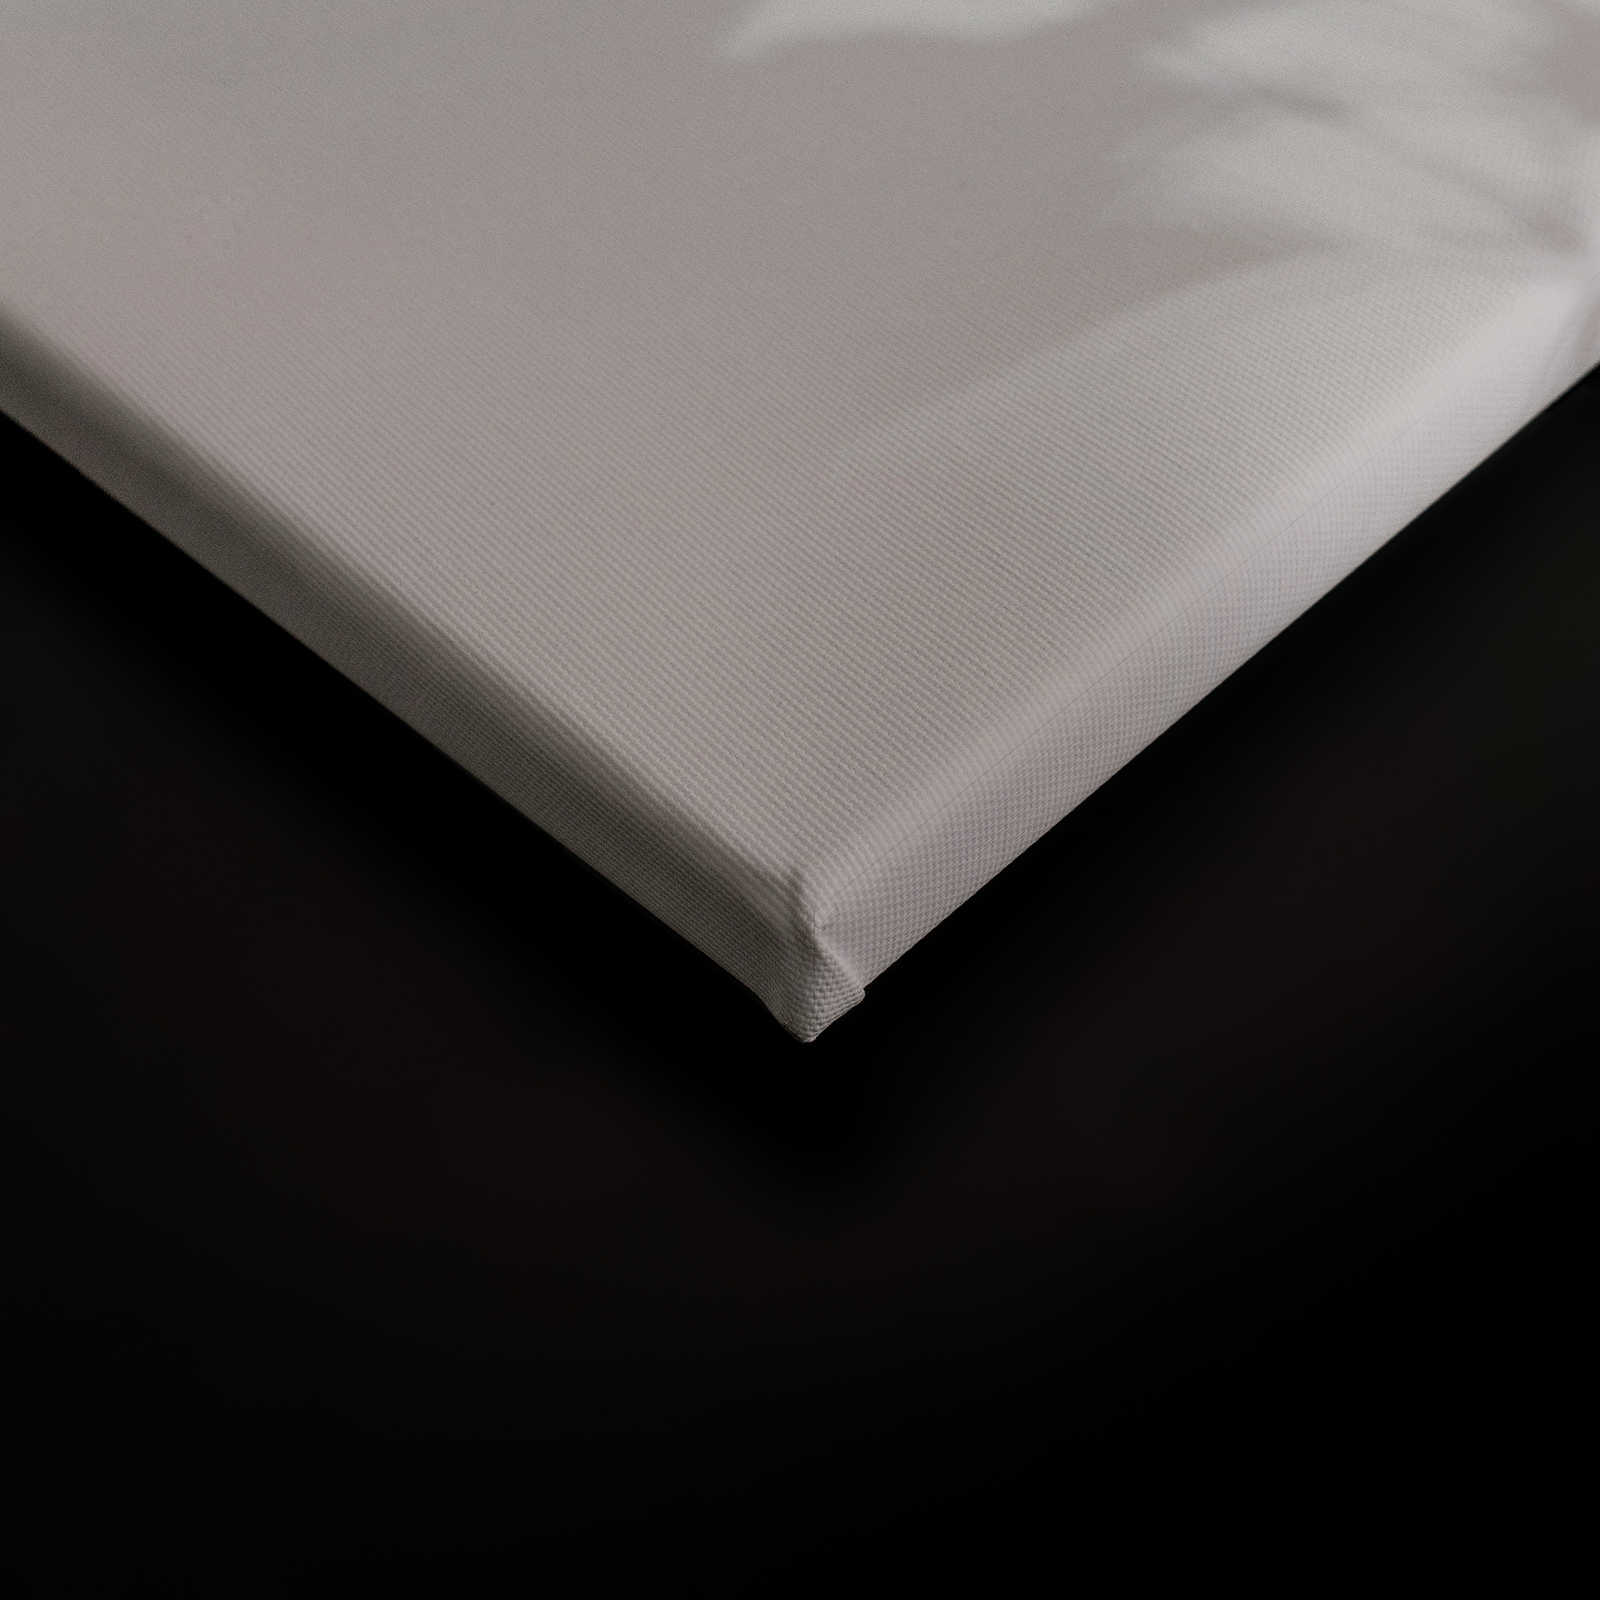             Shadow Room 2 - Natur Leinwandbild Grau & Weiß, verblasstes Design – 1,20 m x 0,80 m
        